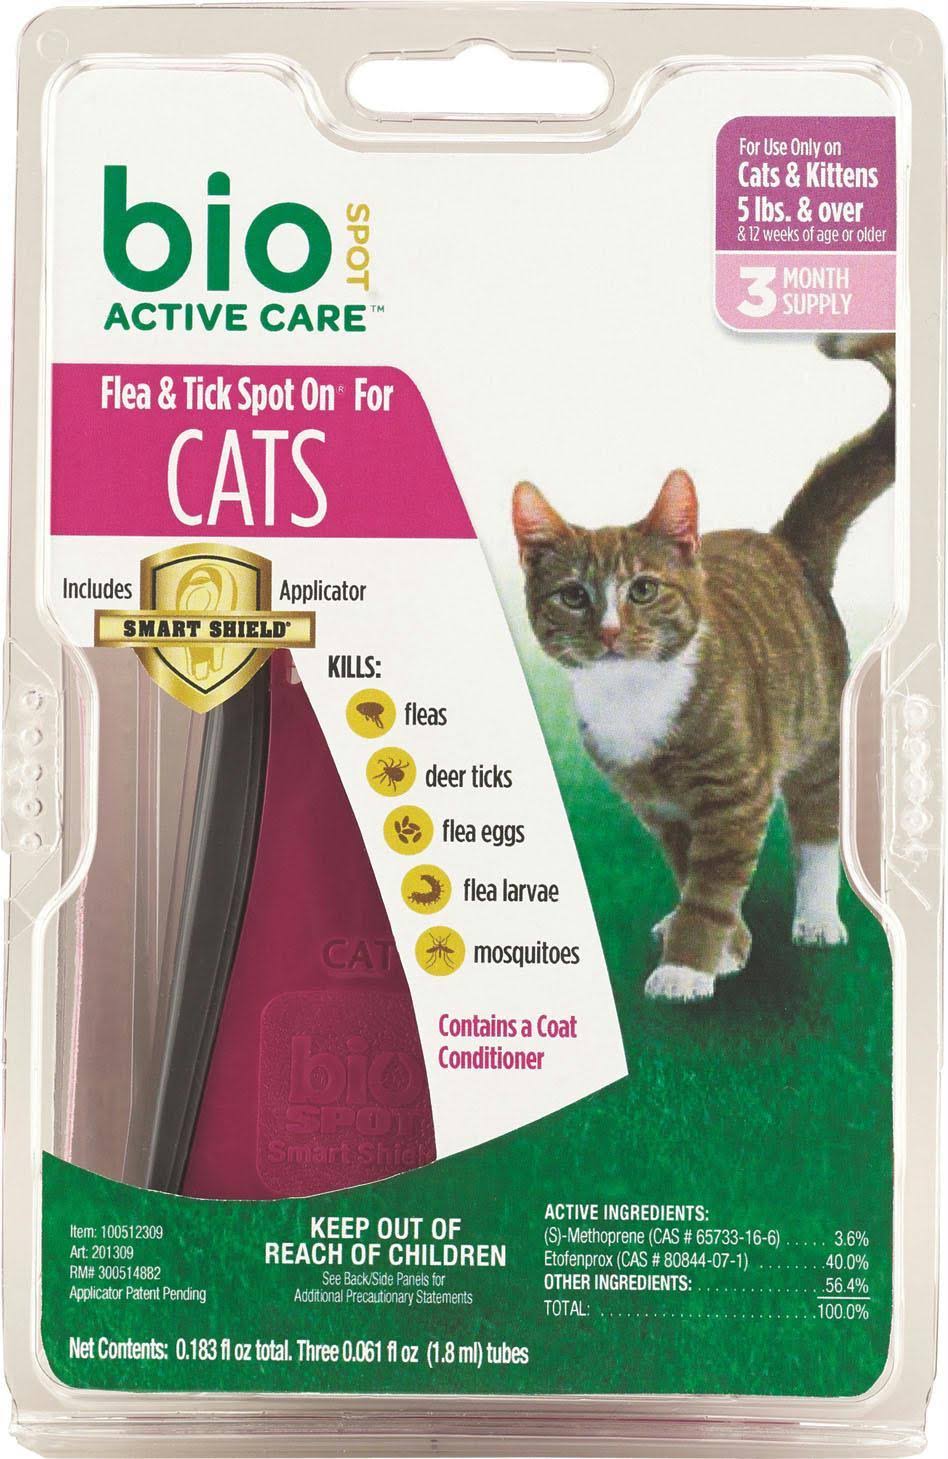 BioSpot Active Care Flea & Tick Spot On for Cats